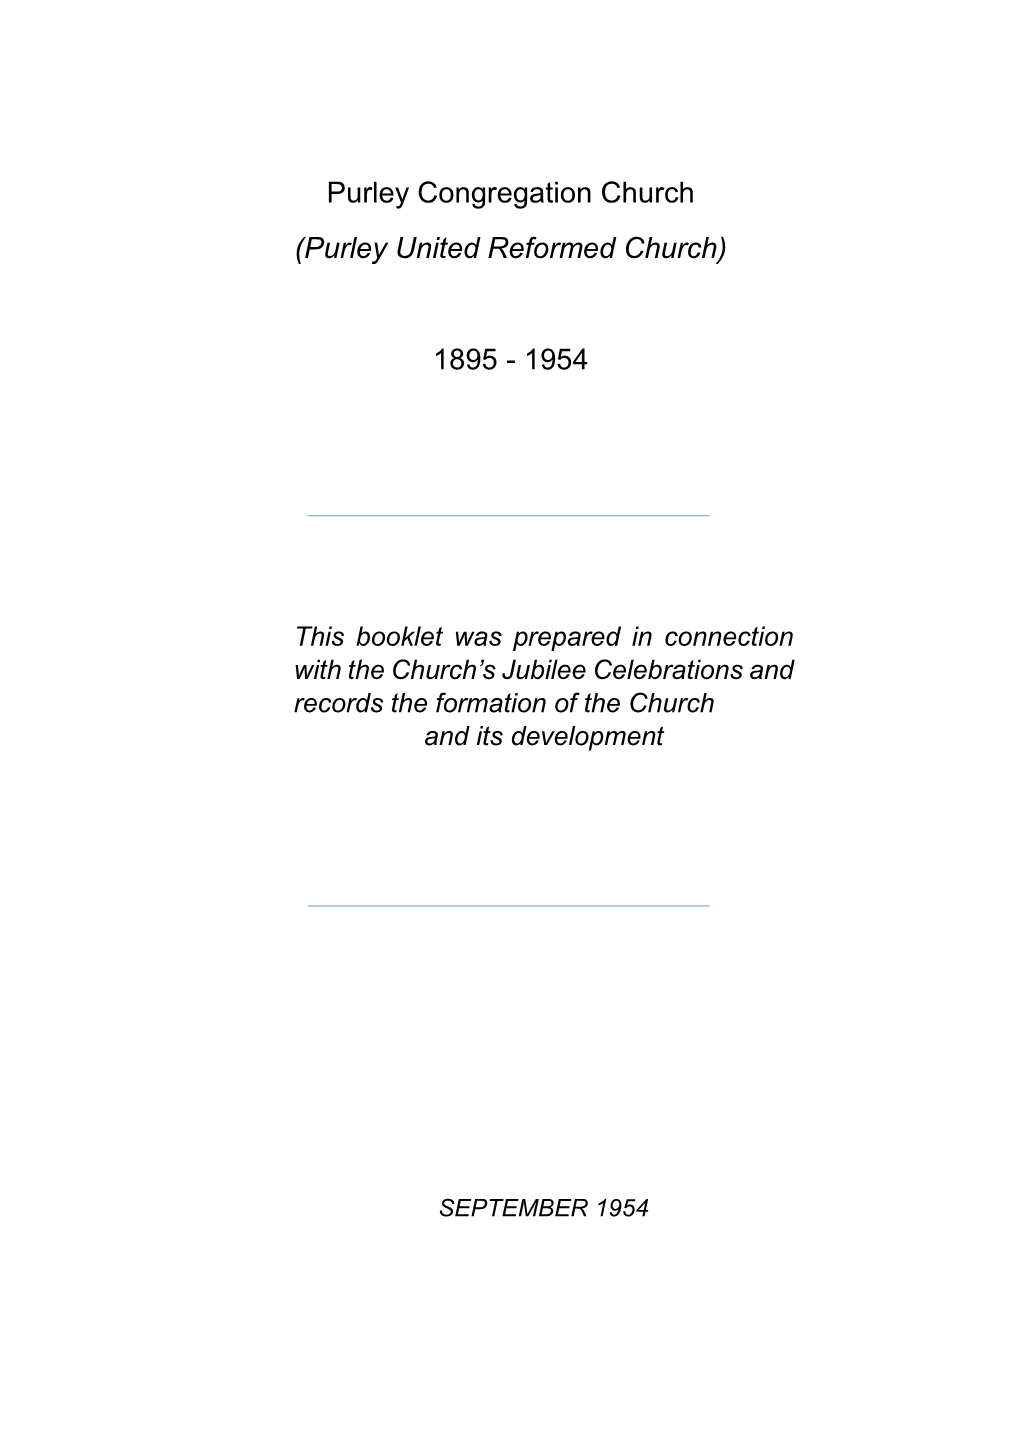 Purley Congregation Church (Purley United Reformed Church) 1895